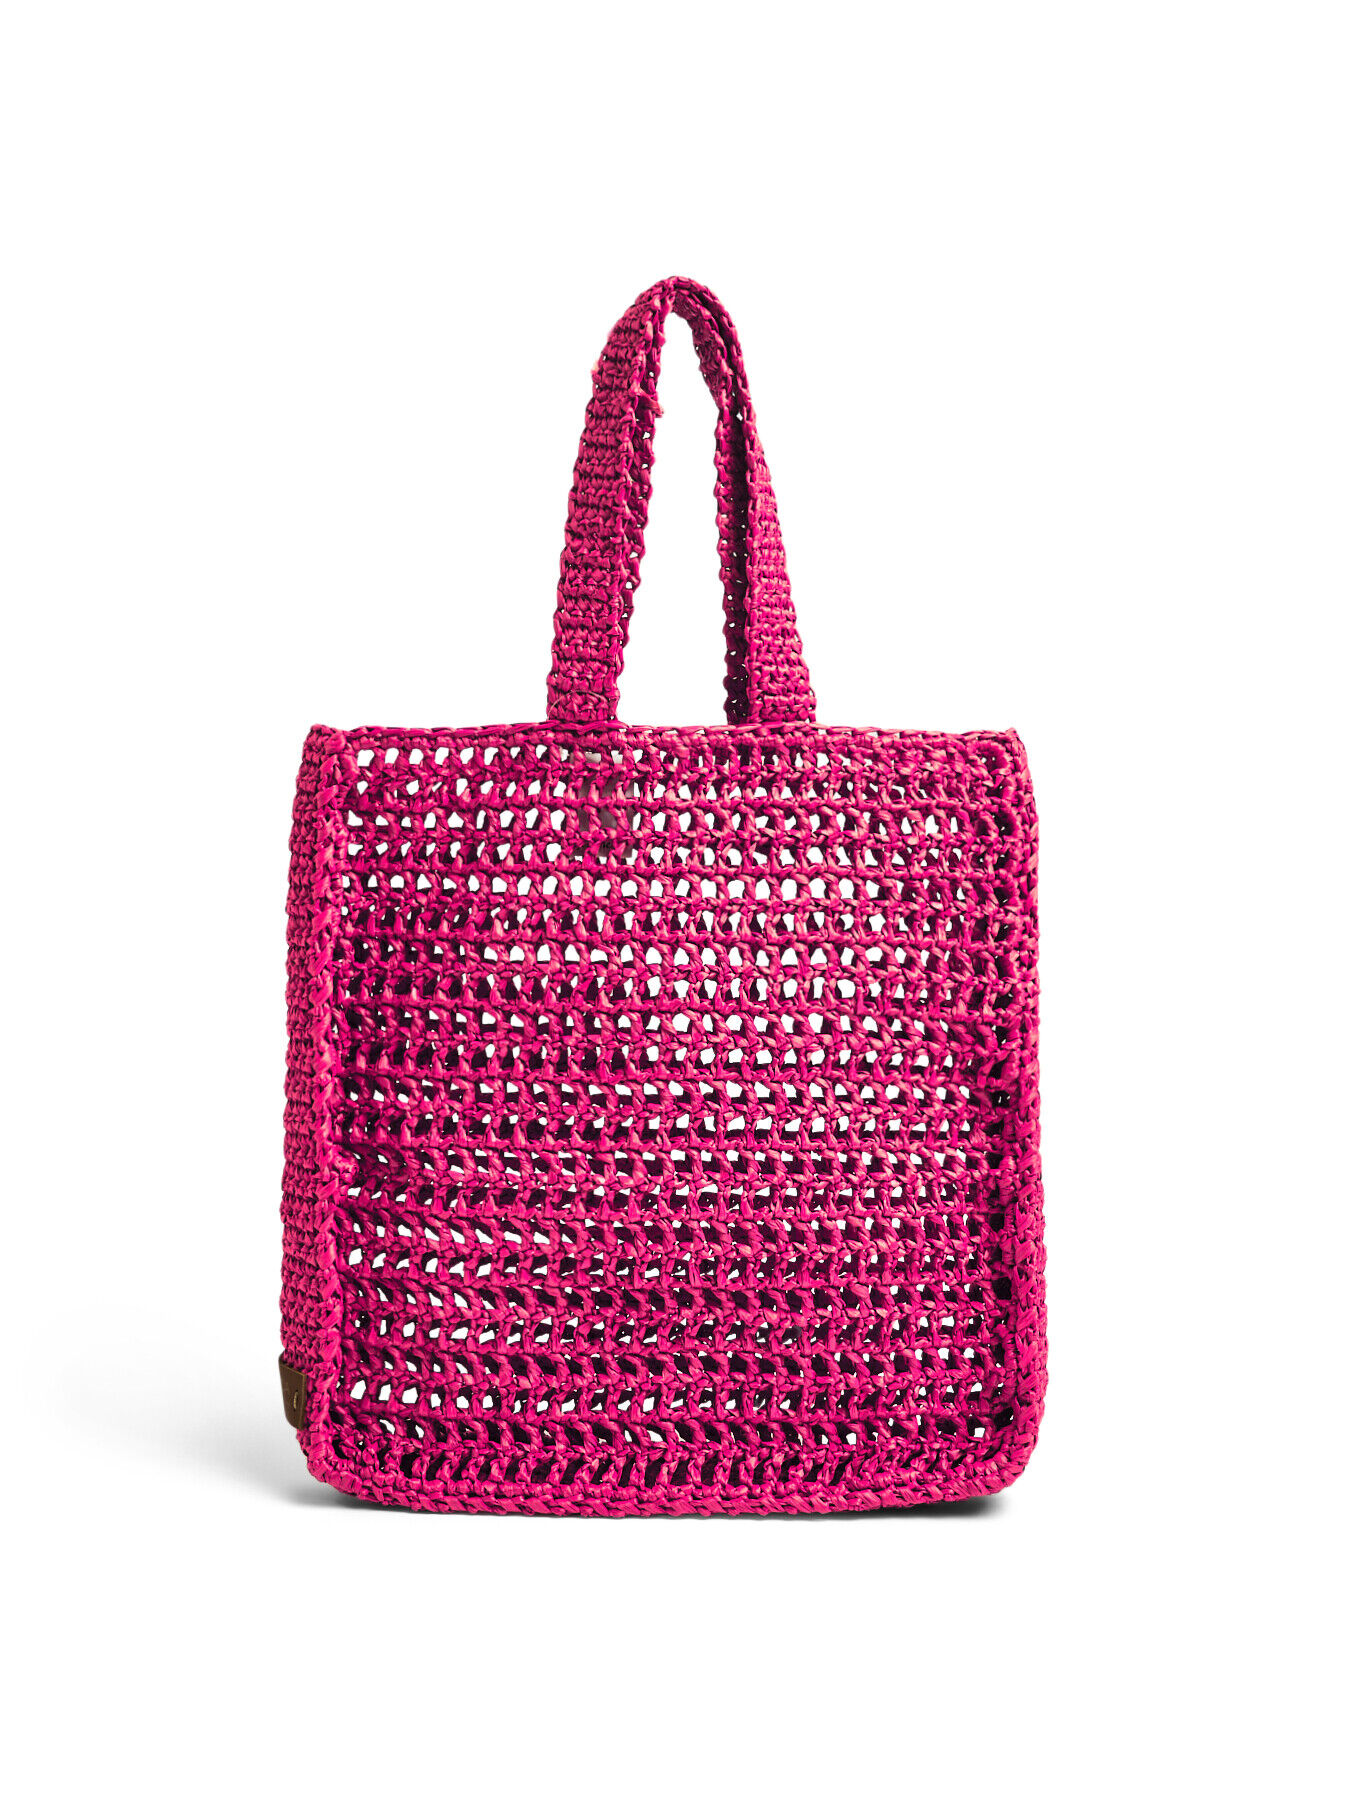 Outlet Handbagss | discounted designer bags | Kate Spade UK